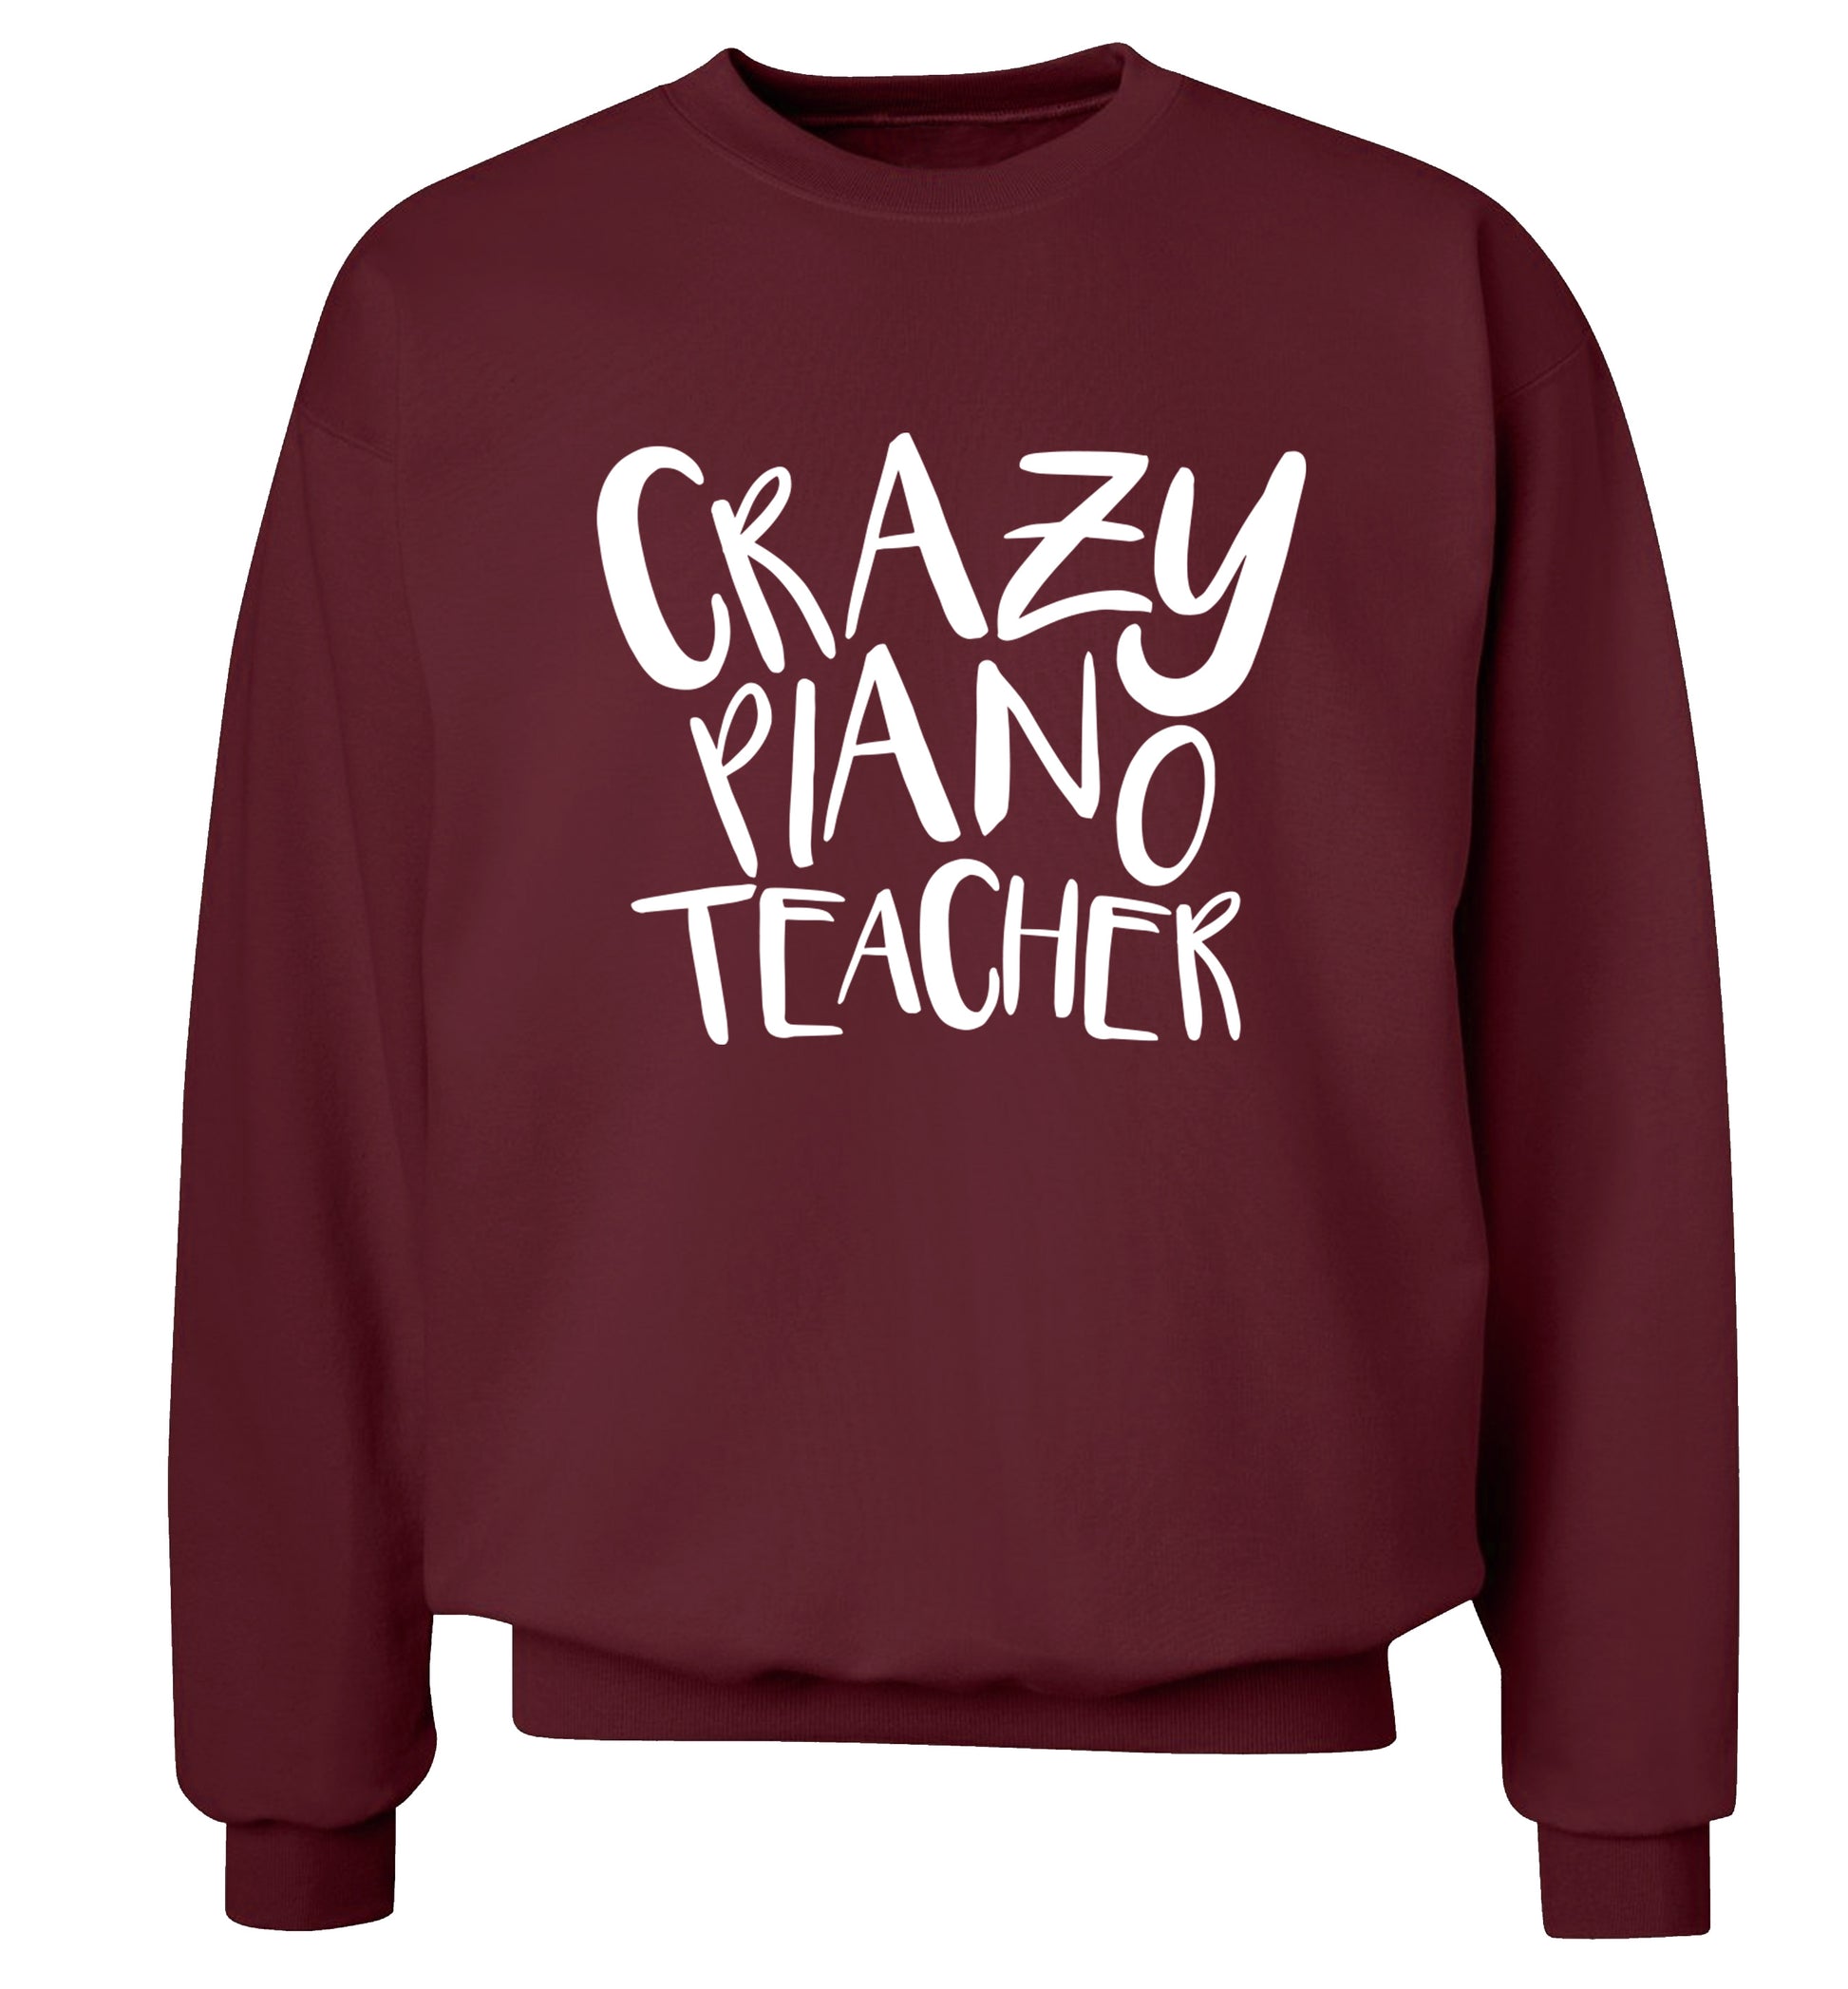 Crazy piano teacher Adult's unisex maroon Sweater 2XL